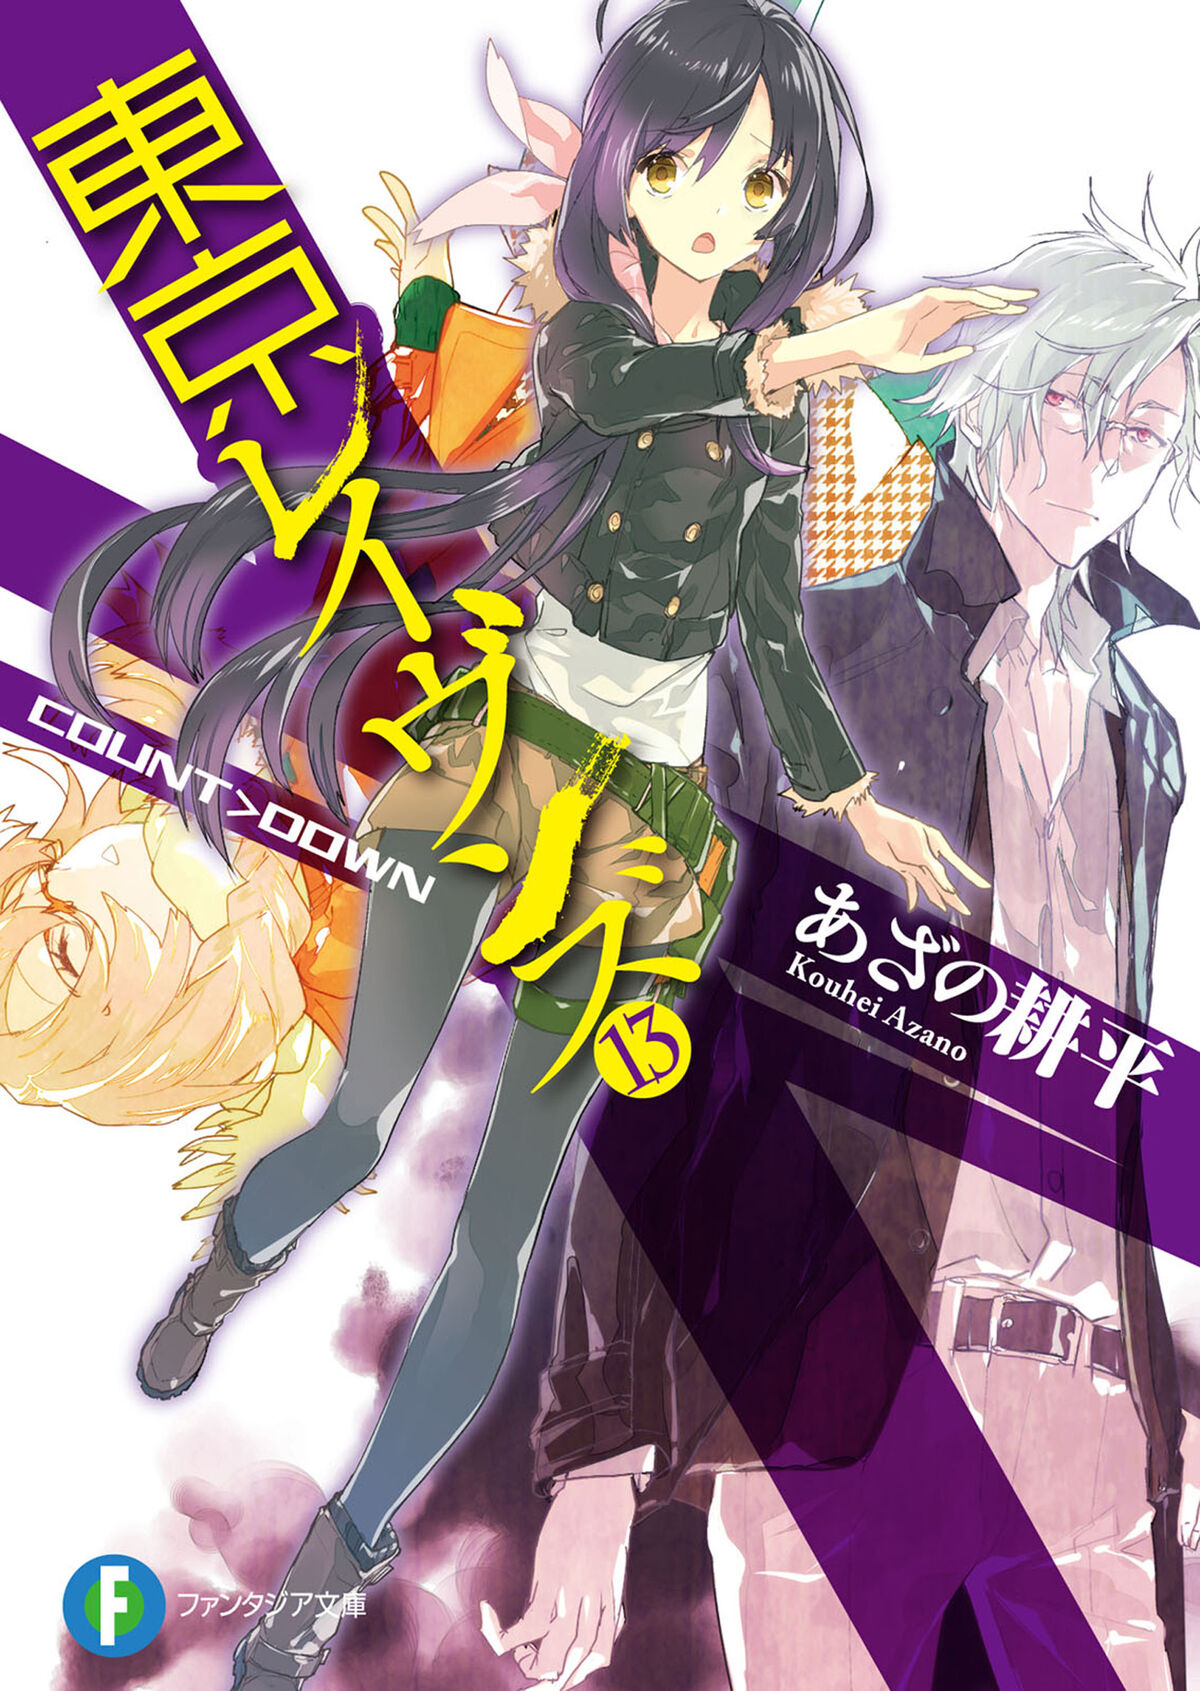 Tokyo Ravens Light Novel Volume 12, Tokyo Ravens Wiki, tokyo ravens novel 